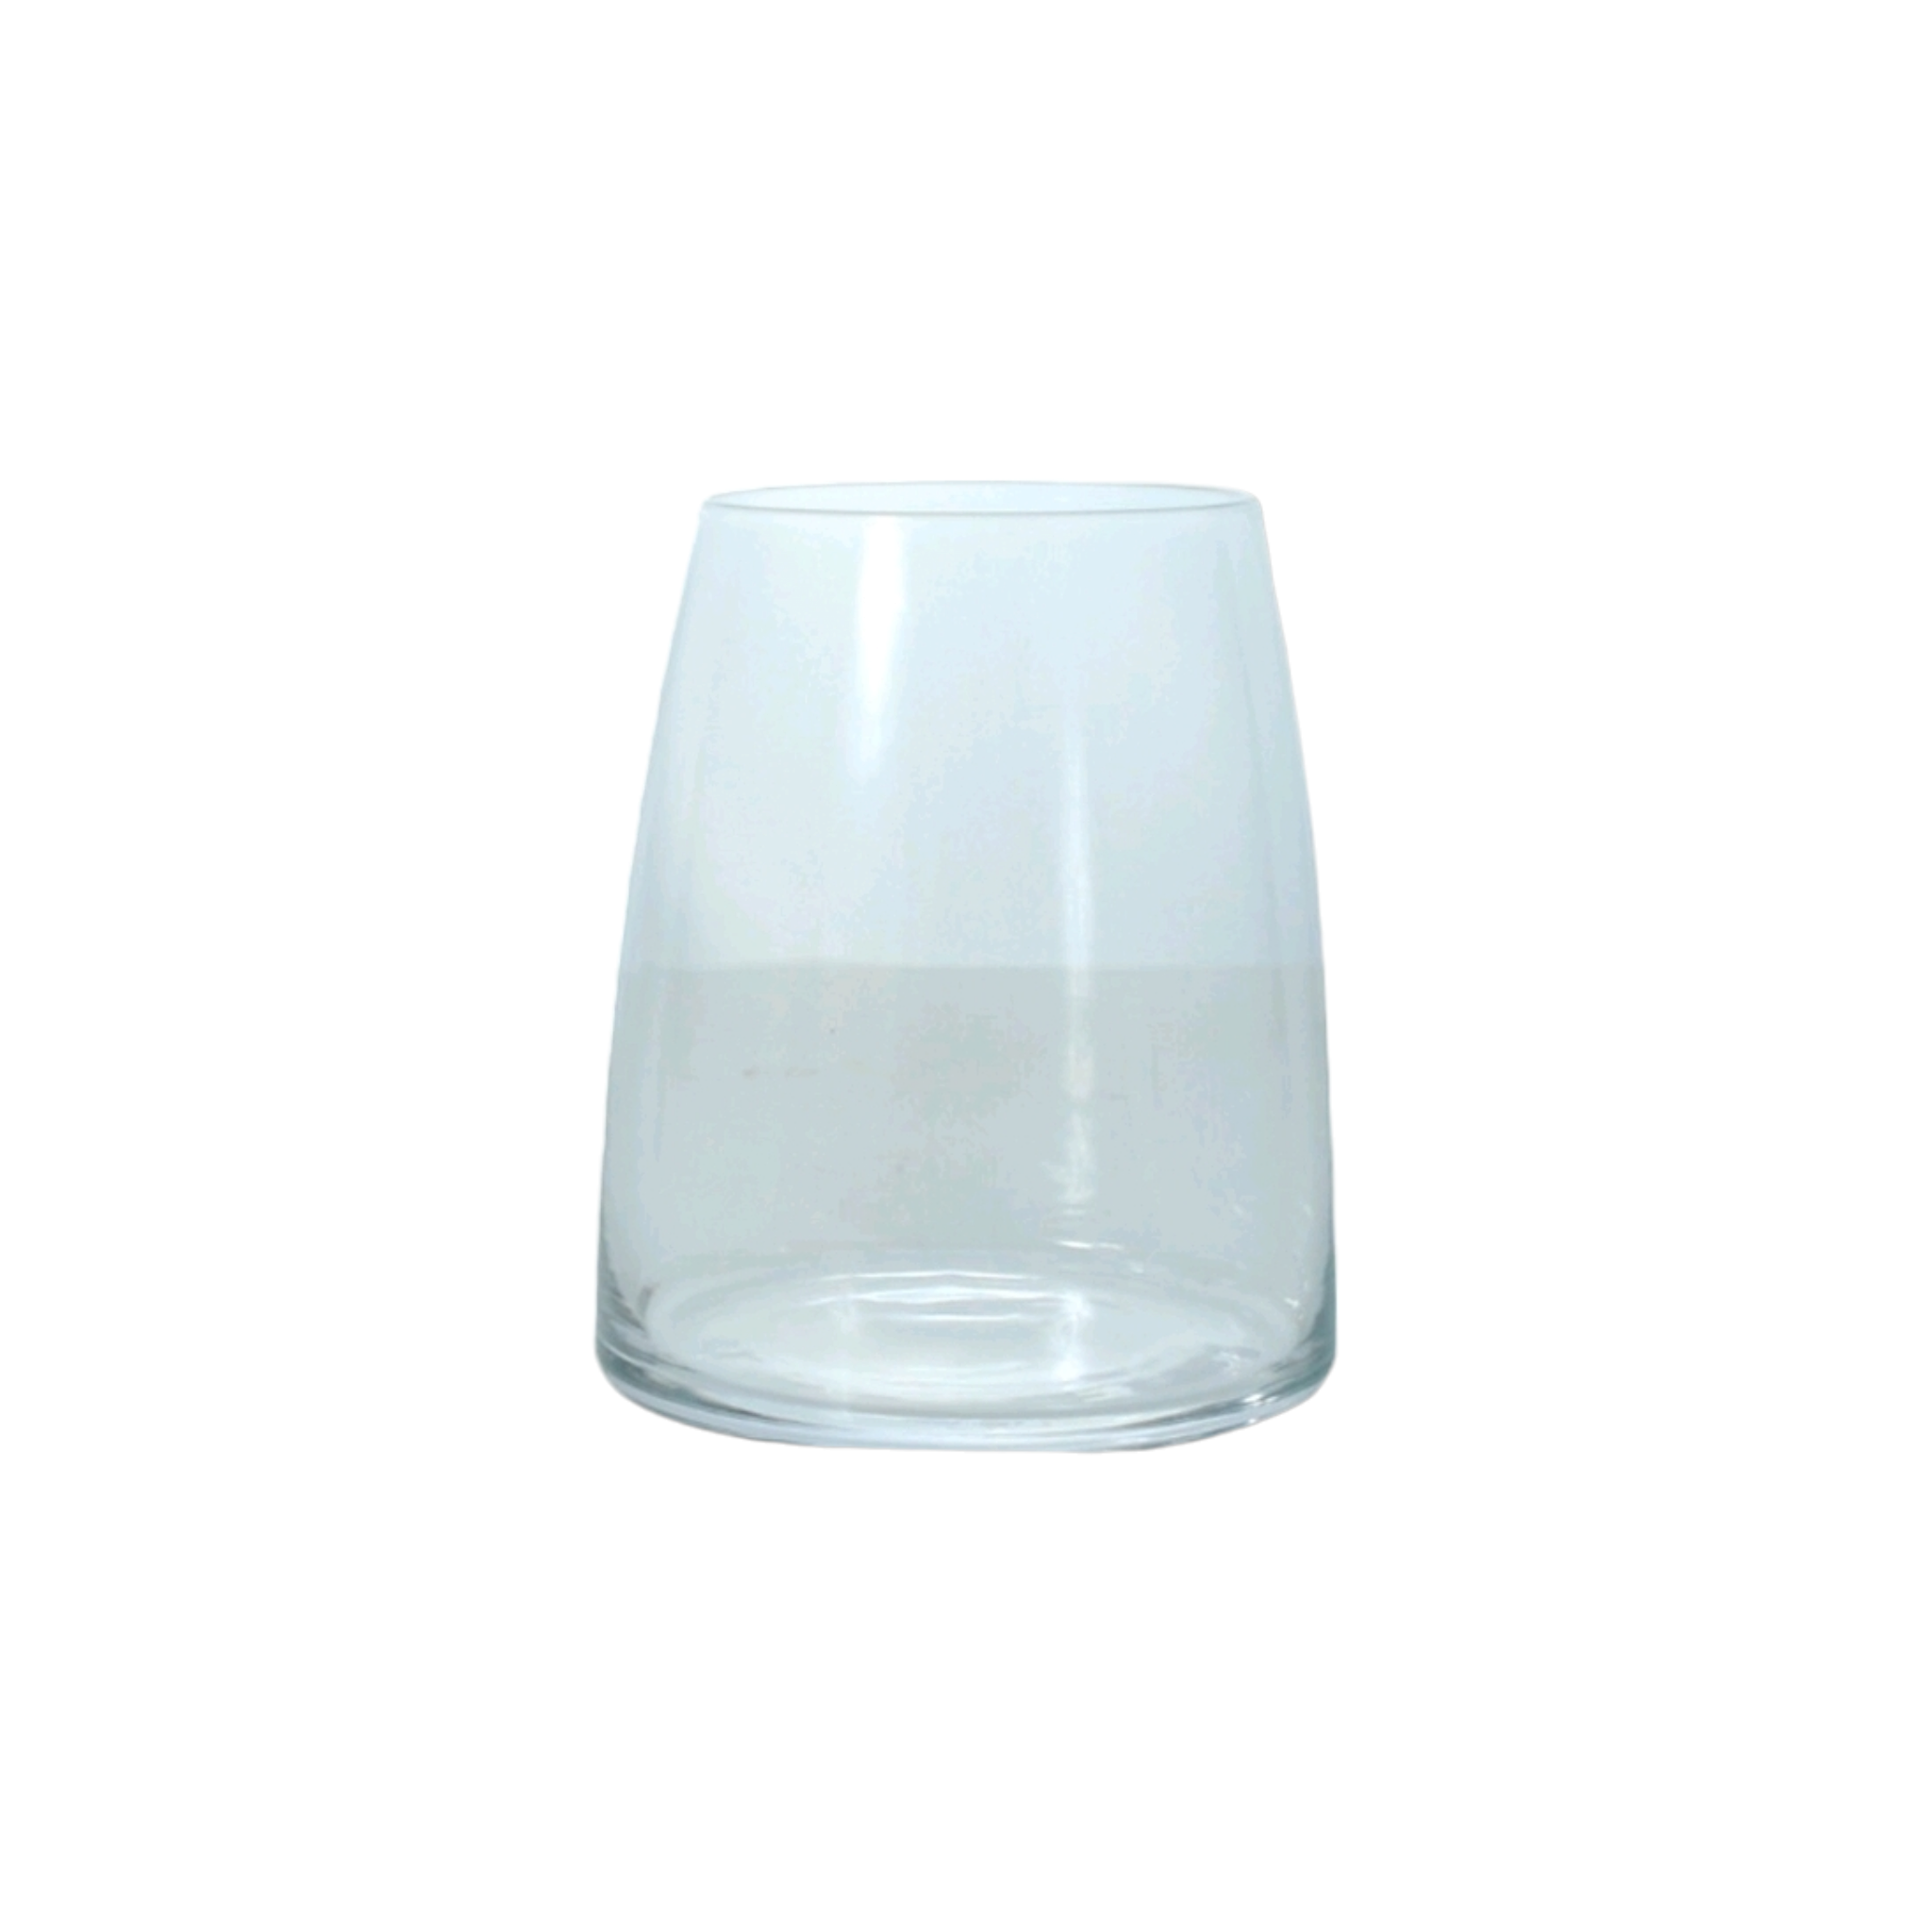 Pasabahce Pinot Water Glass Tumbler 495ml 4Pack 24078